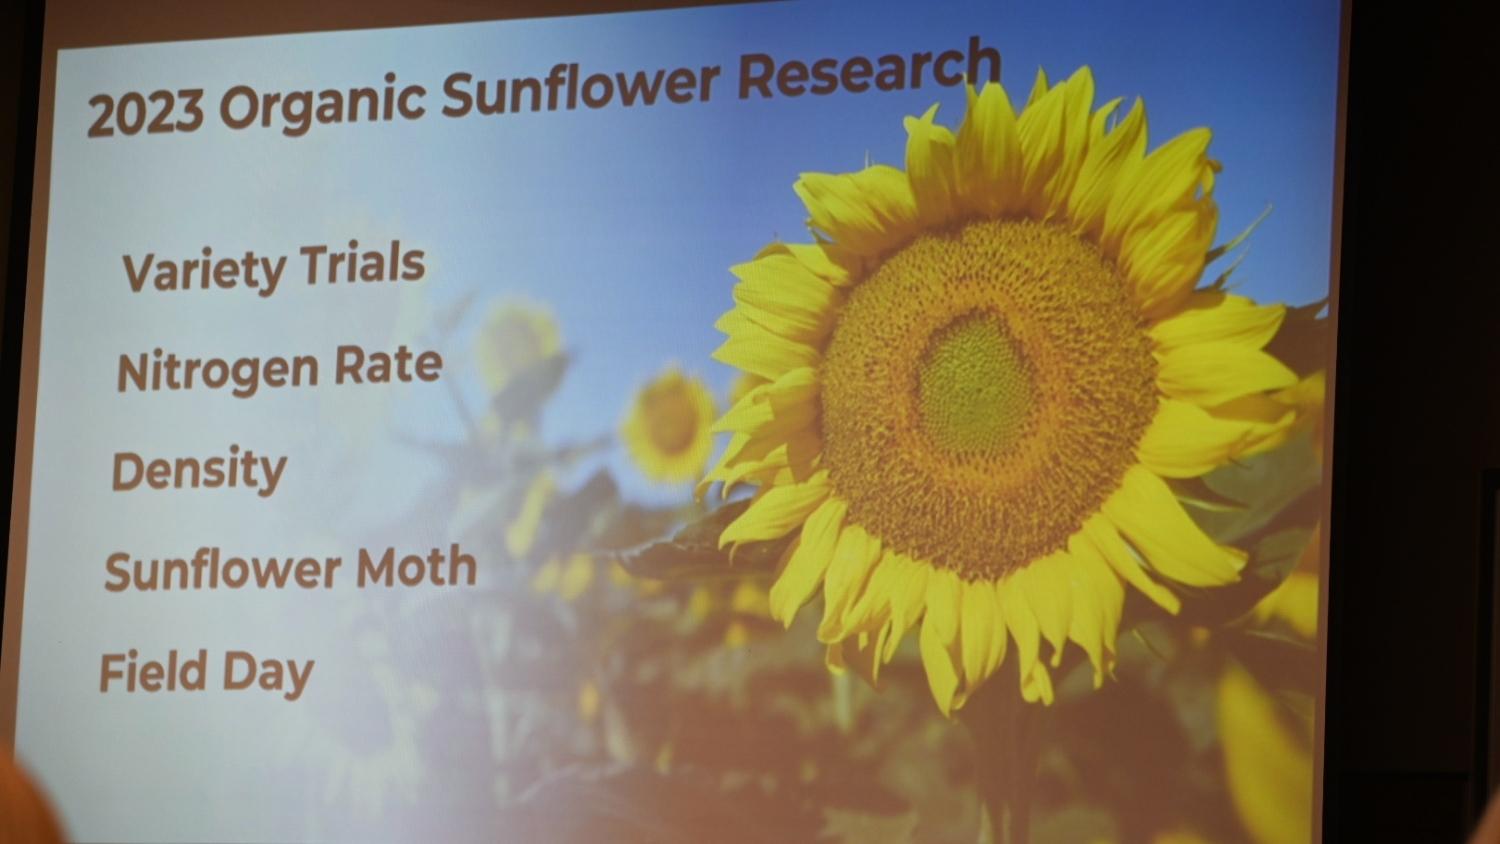 Organic sunflower research slide